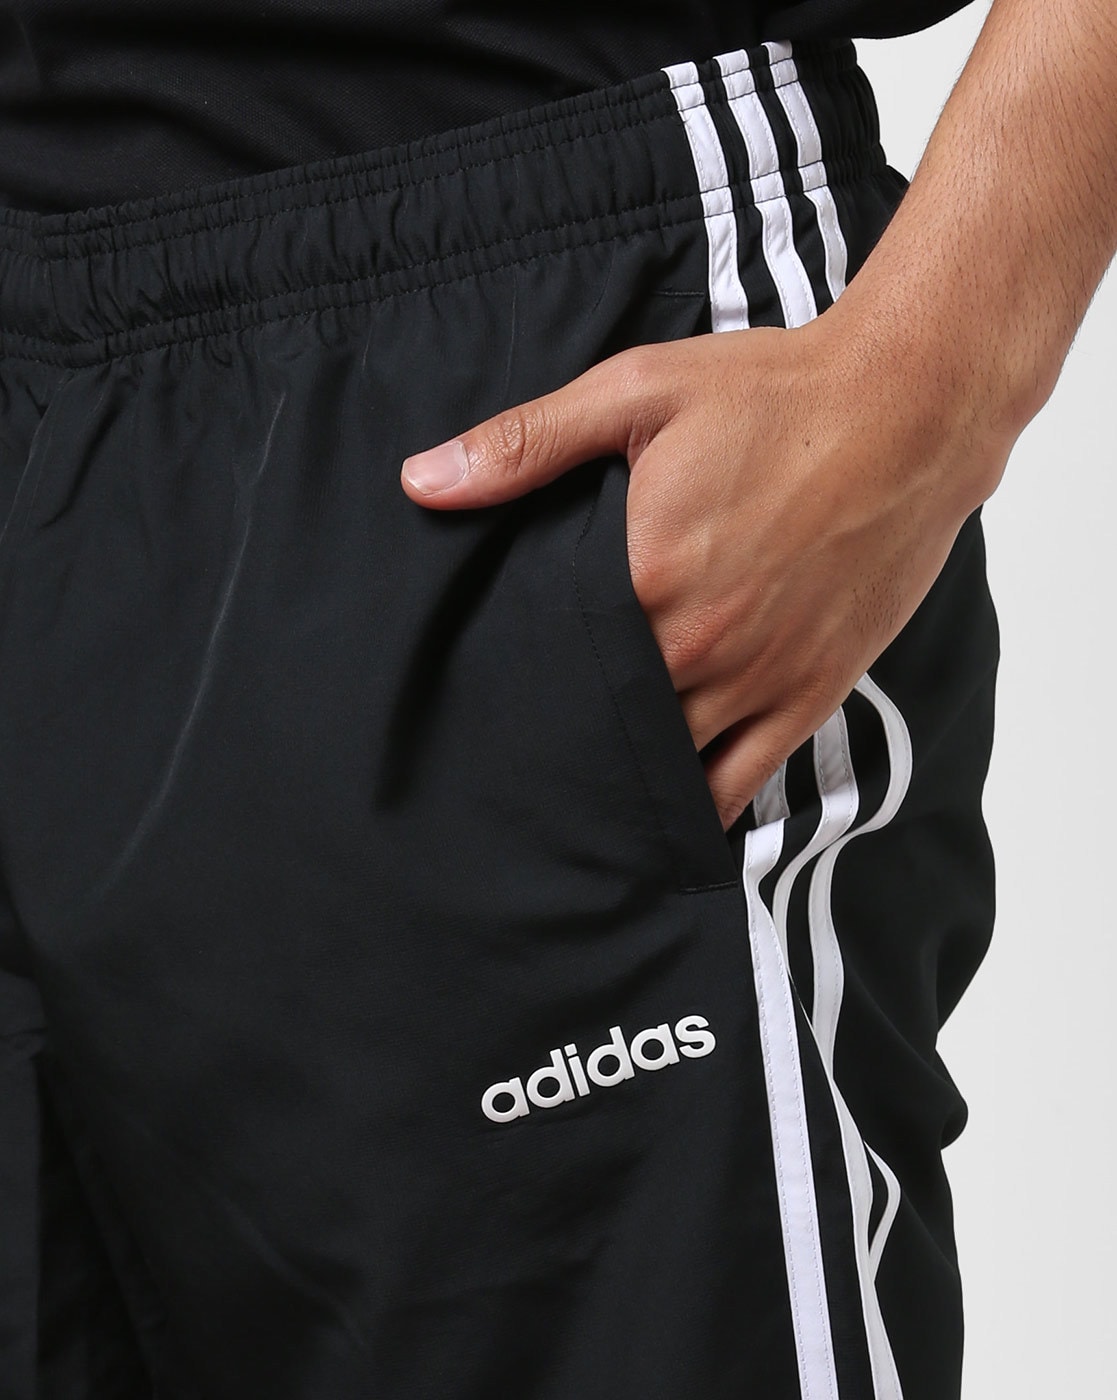 adidas Soccer Pants for Men for sale  eBay